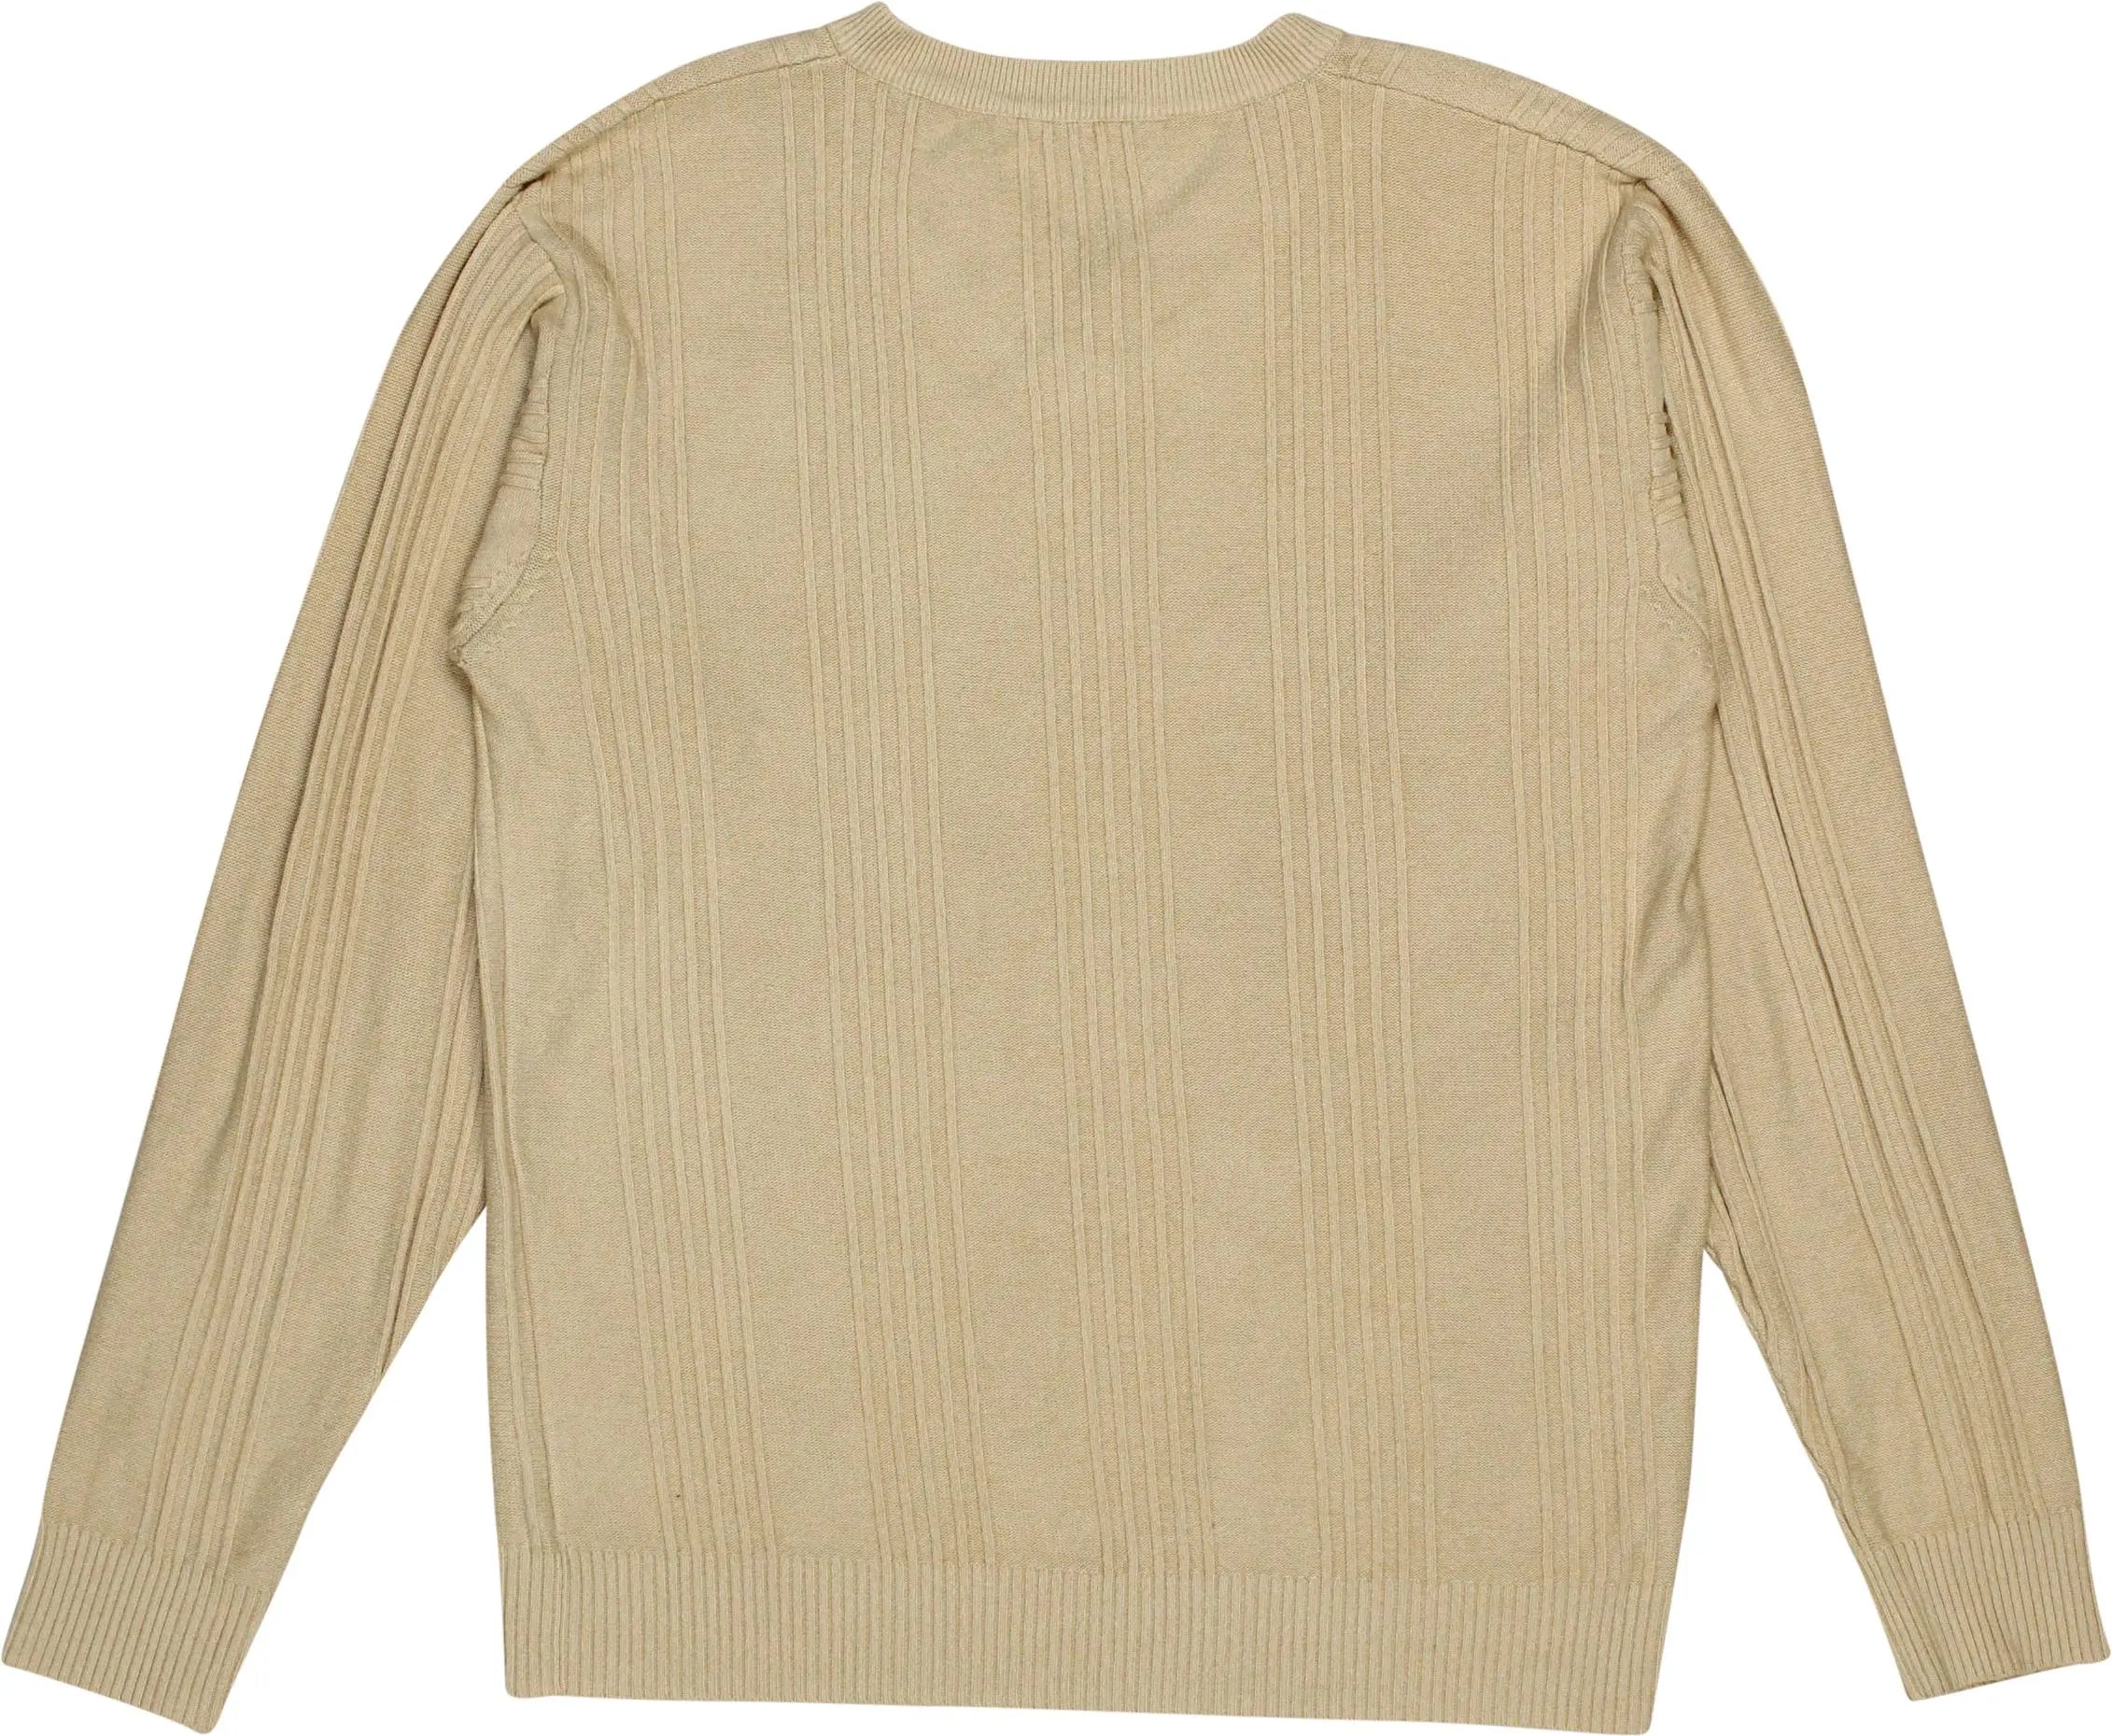 Unknown - Wool Blend V-Neck Jumper- ThriftTale.com - Vintage and second handclothing